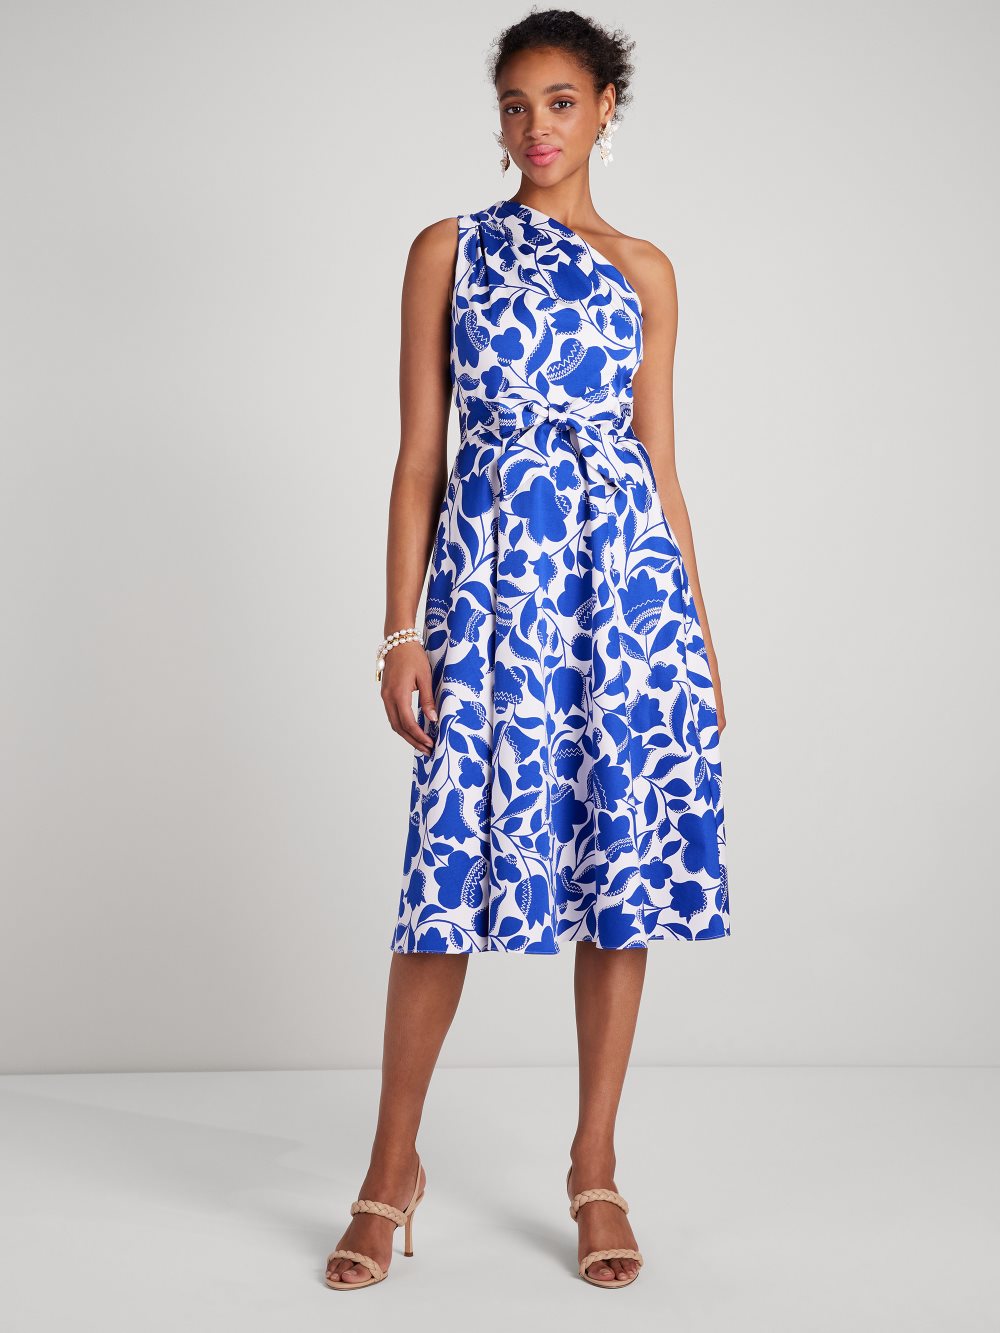 Women's blueberry zigzag floral belted sabrina dress | Kate Spade